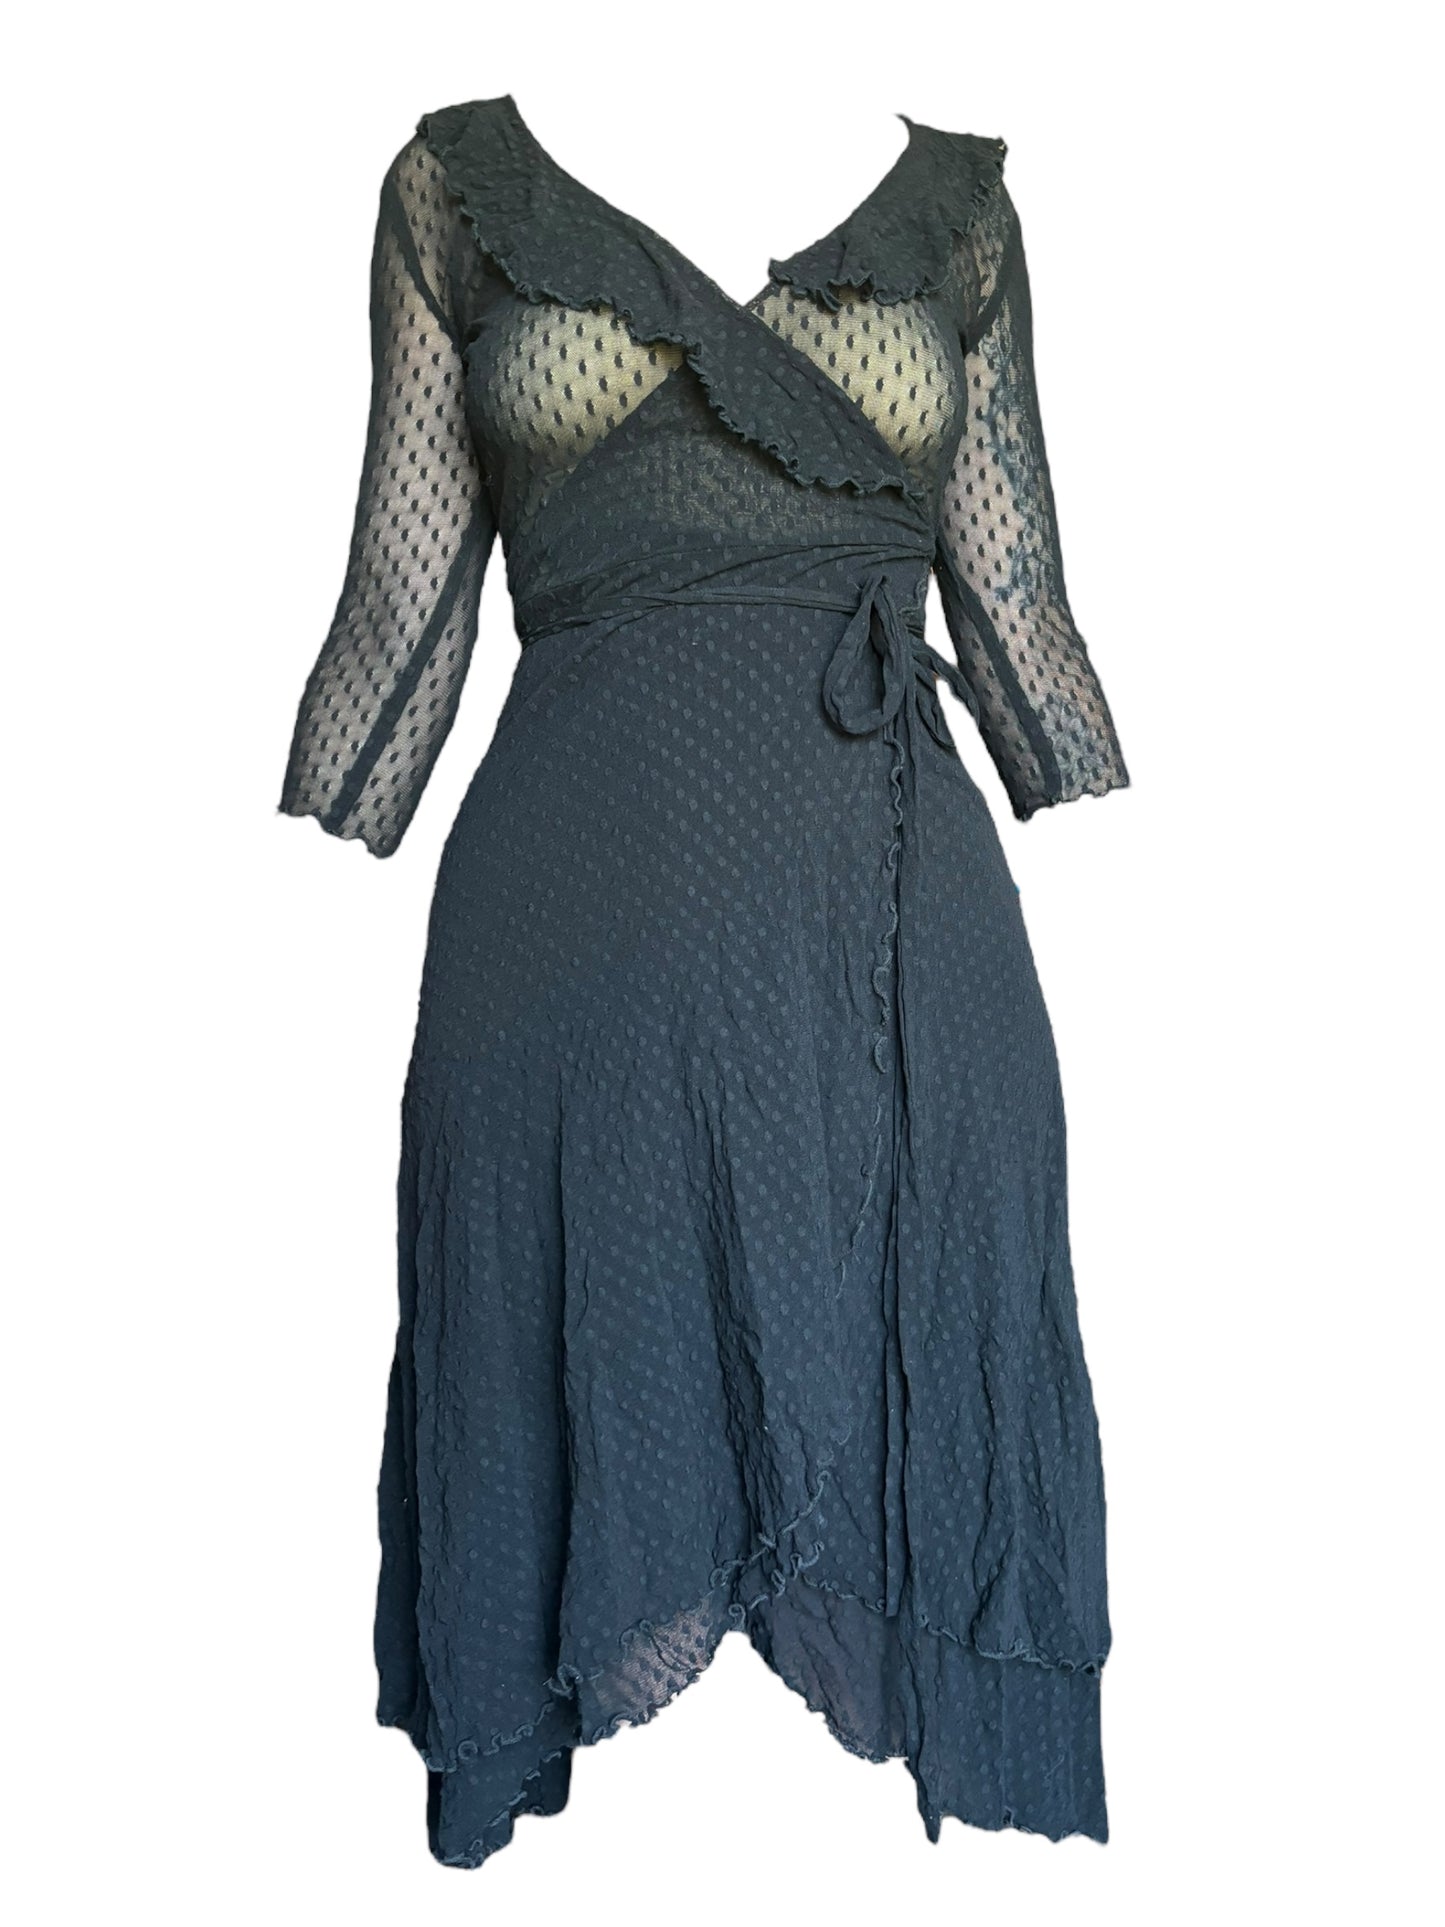 Vintage Betsey Johnson Black Lace Wrap Dress - M